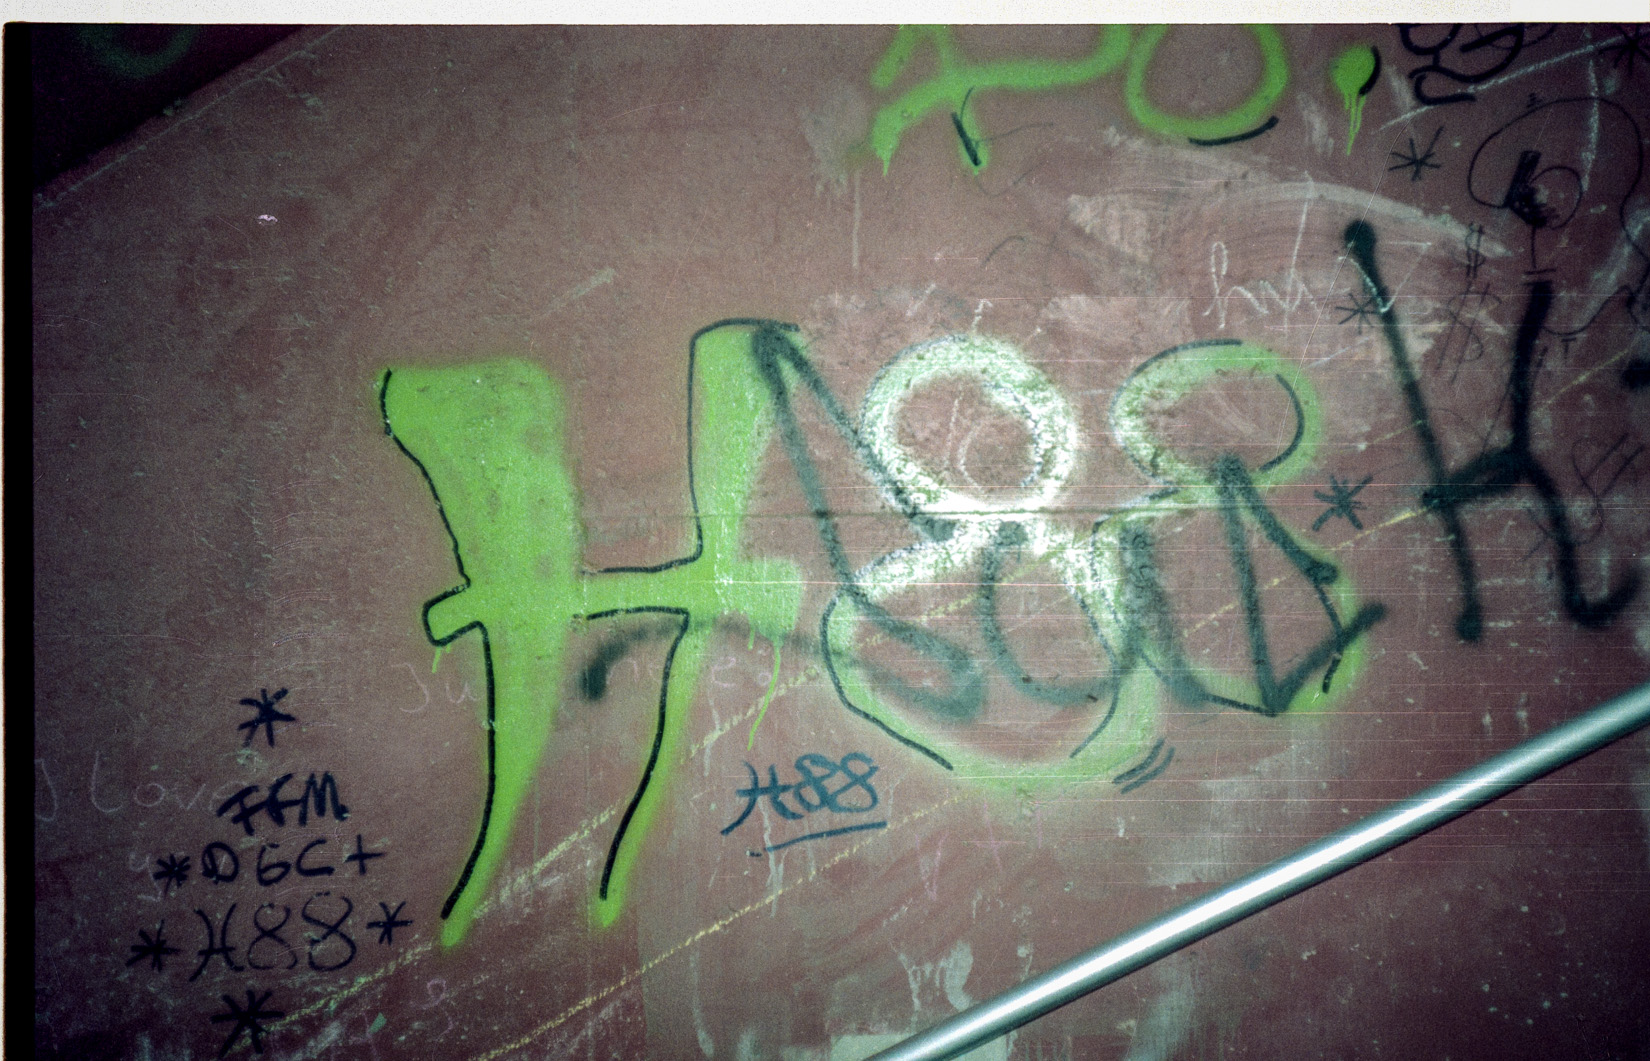 Frankfurt_Graffiti_1988_1989_H88_FRC (19 von 25)